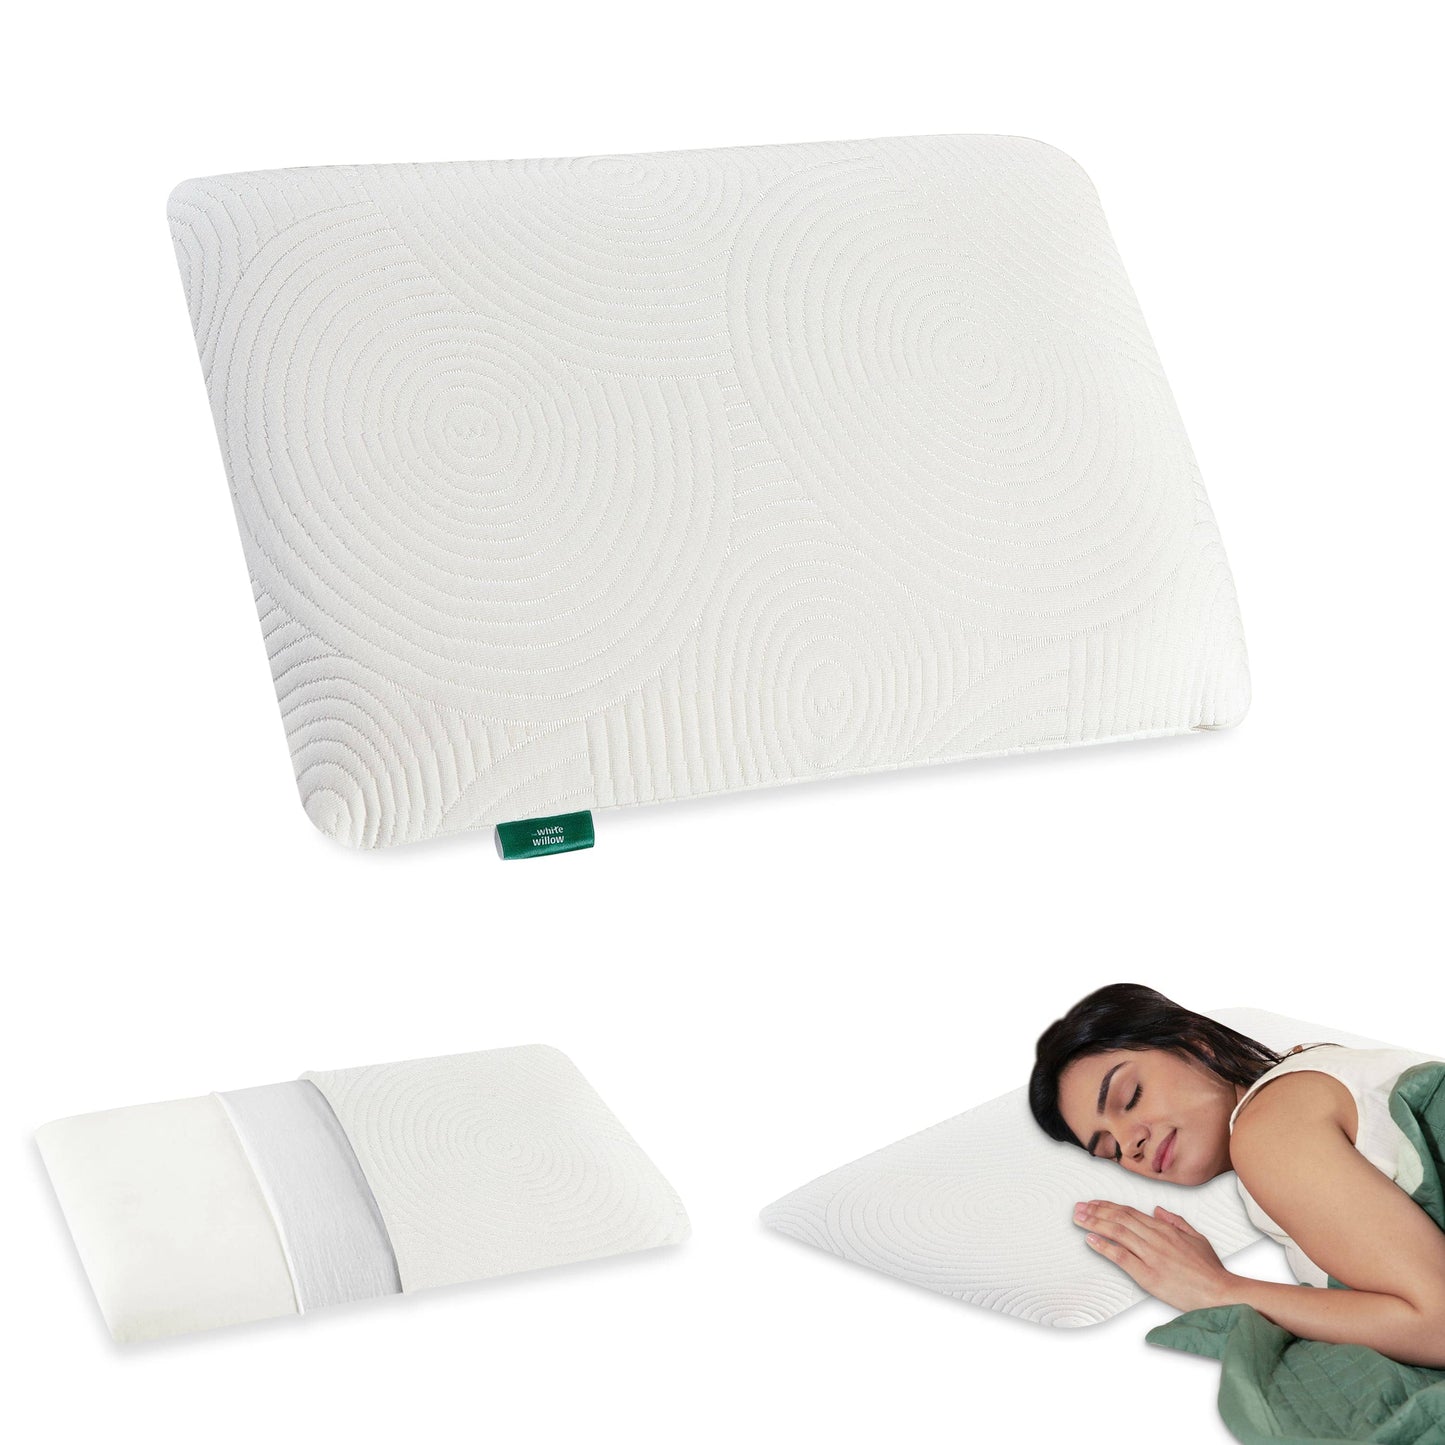 Cypress - Memory Foam Pillow - Regular - Medium Firm Regular Pillow The White Willow Ultra Slim 1.5"H King 24x16 Pack of 1 White